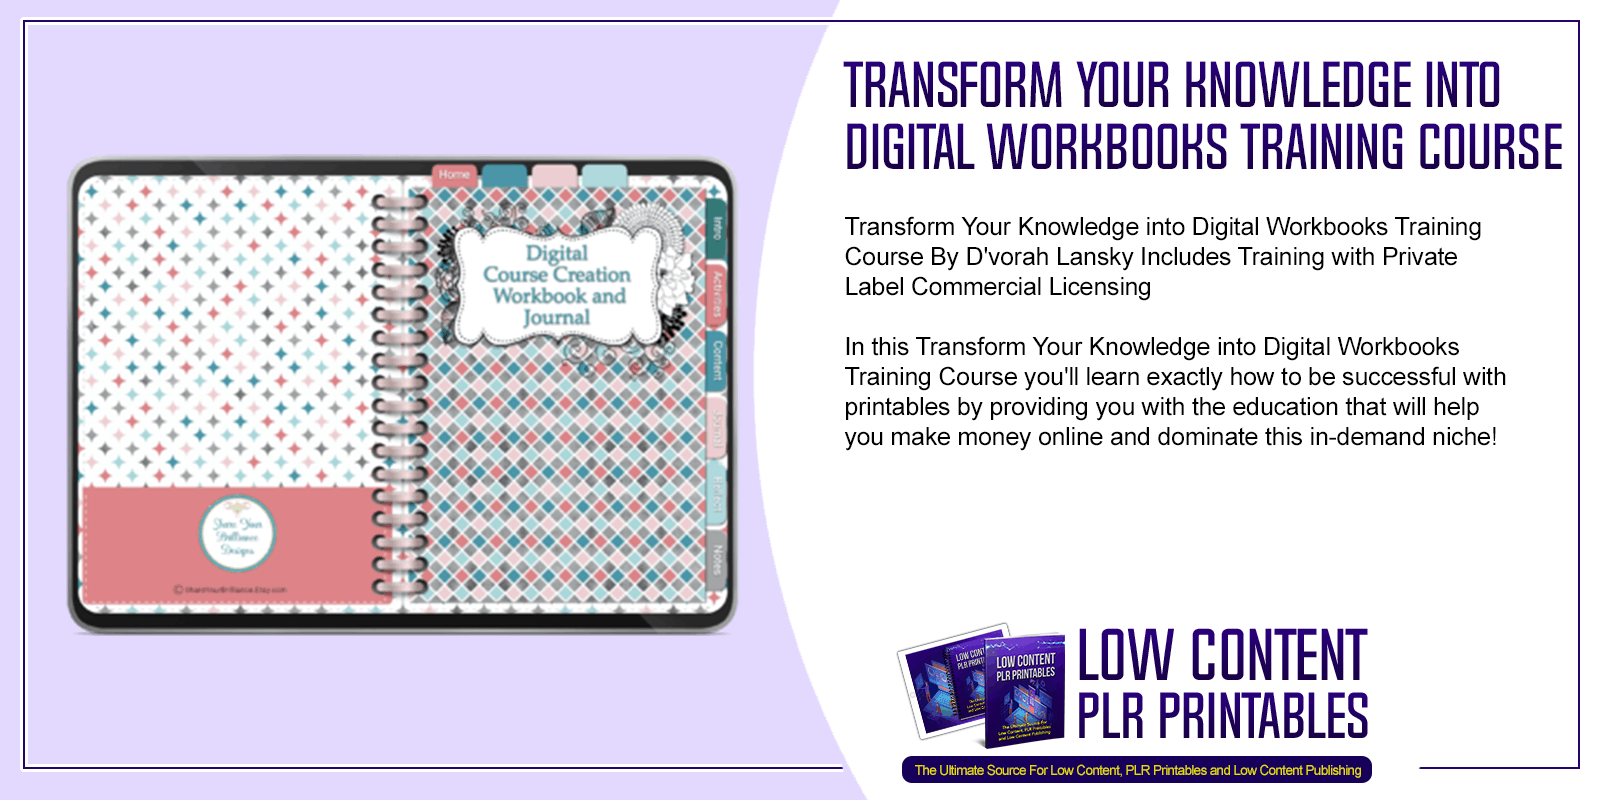 Transform Your Knowledge into Digital Workbooks Training Course